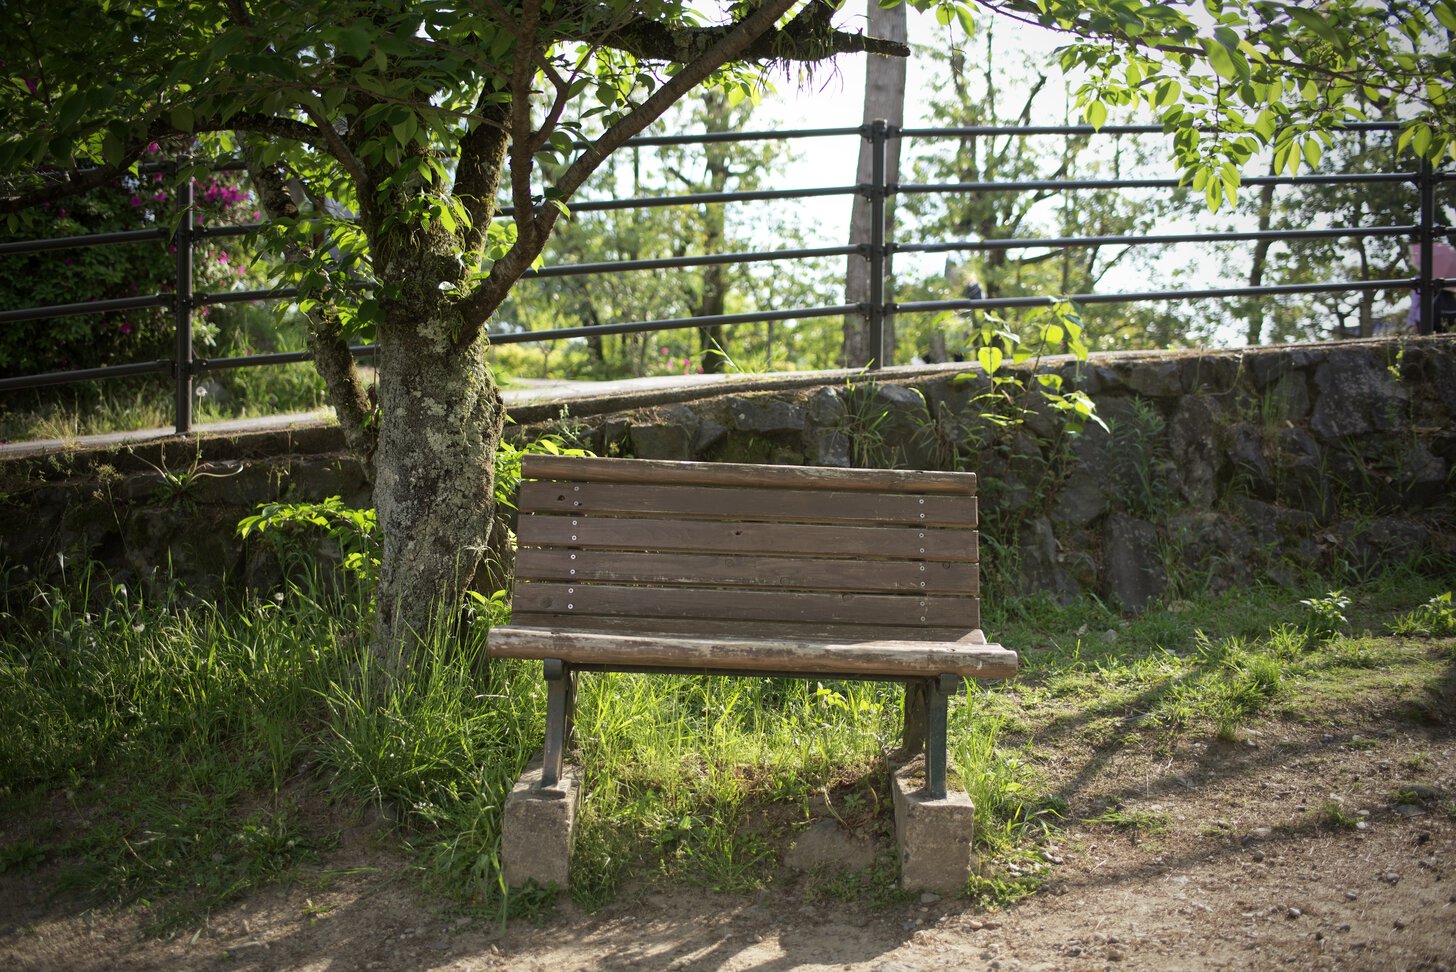 Kumiko's bench in Uji, Japan (approximately 34.889612, 135.808309).